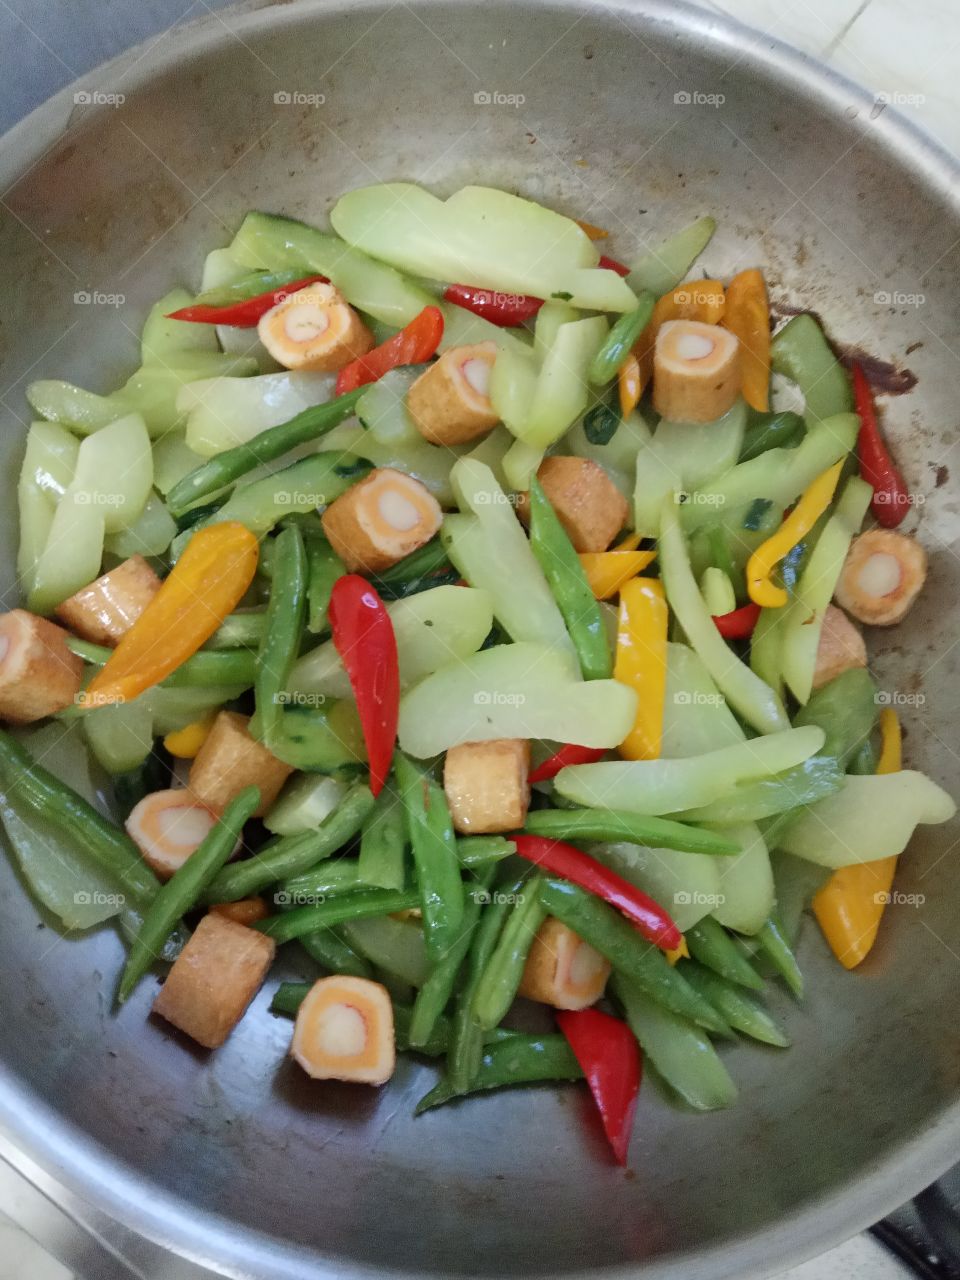 stir fry mixed veggies